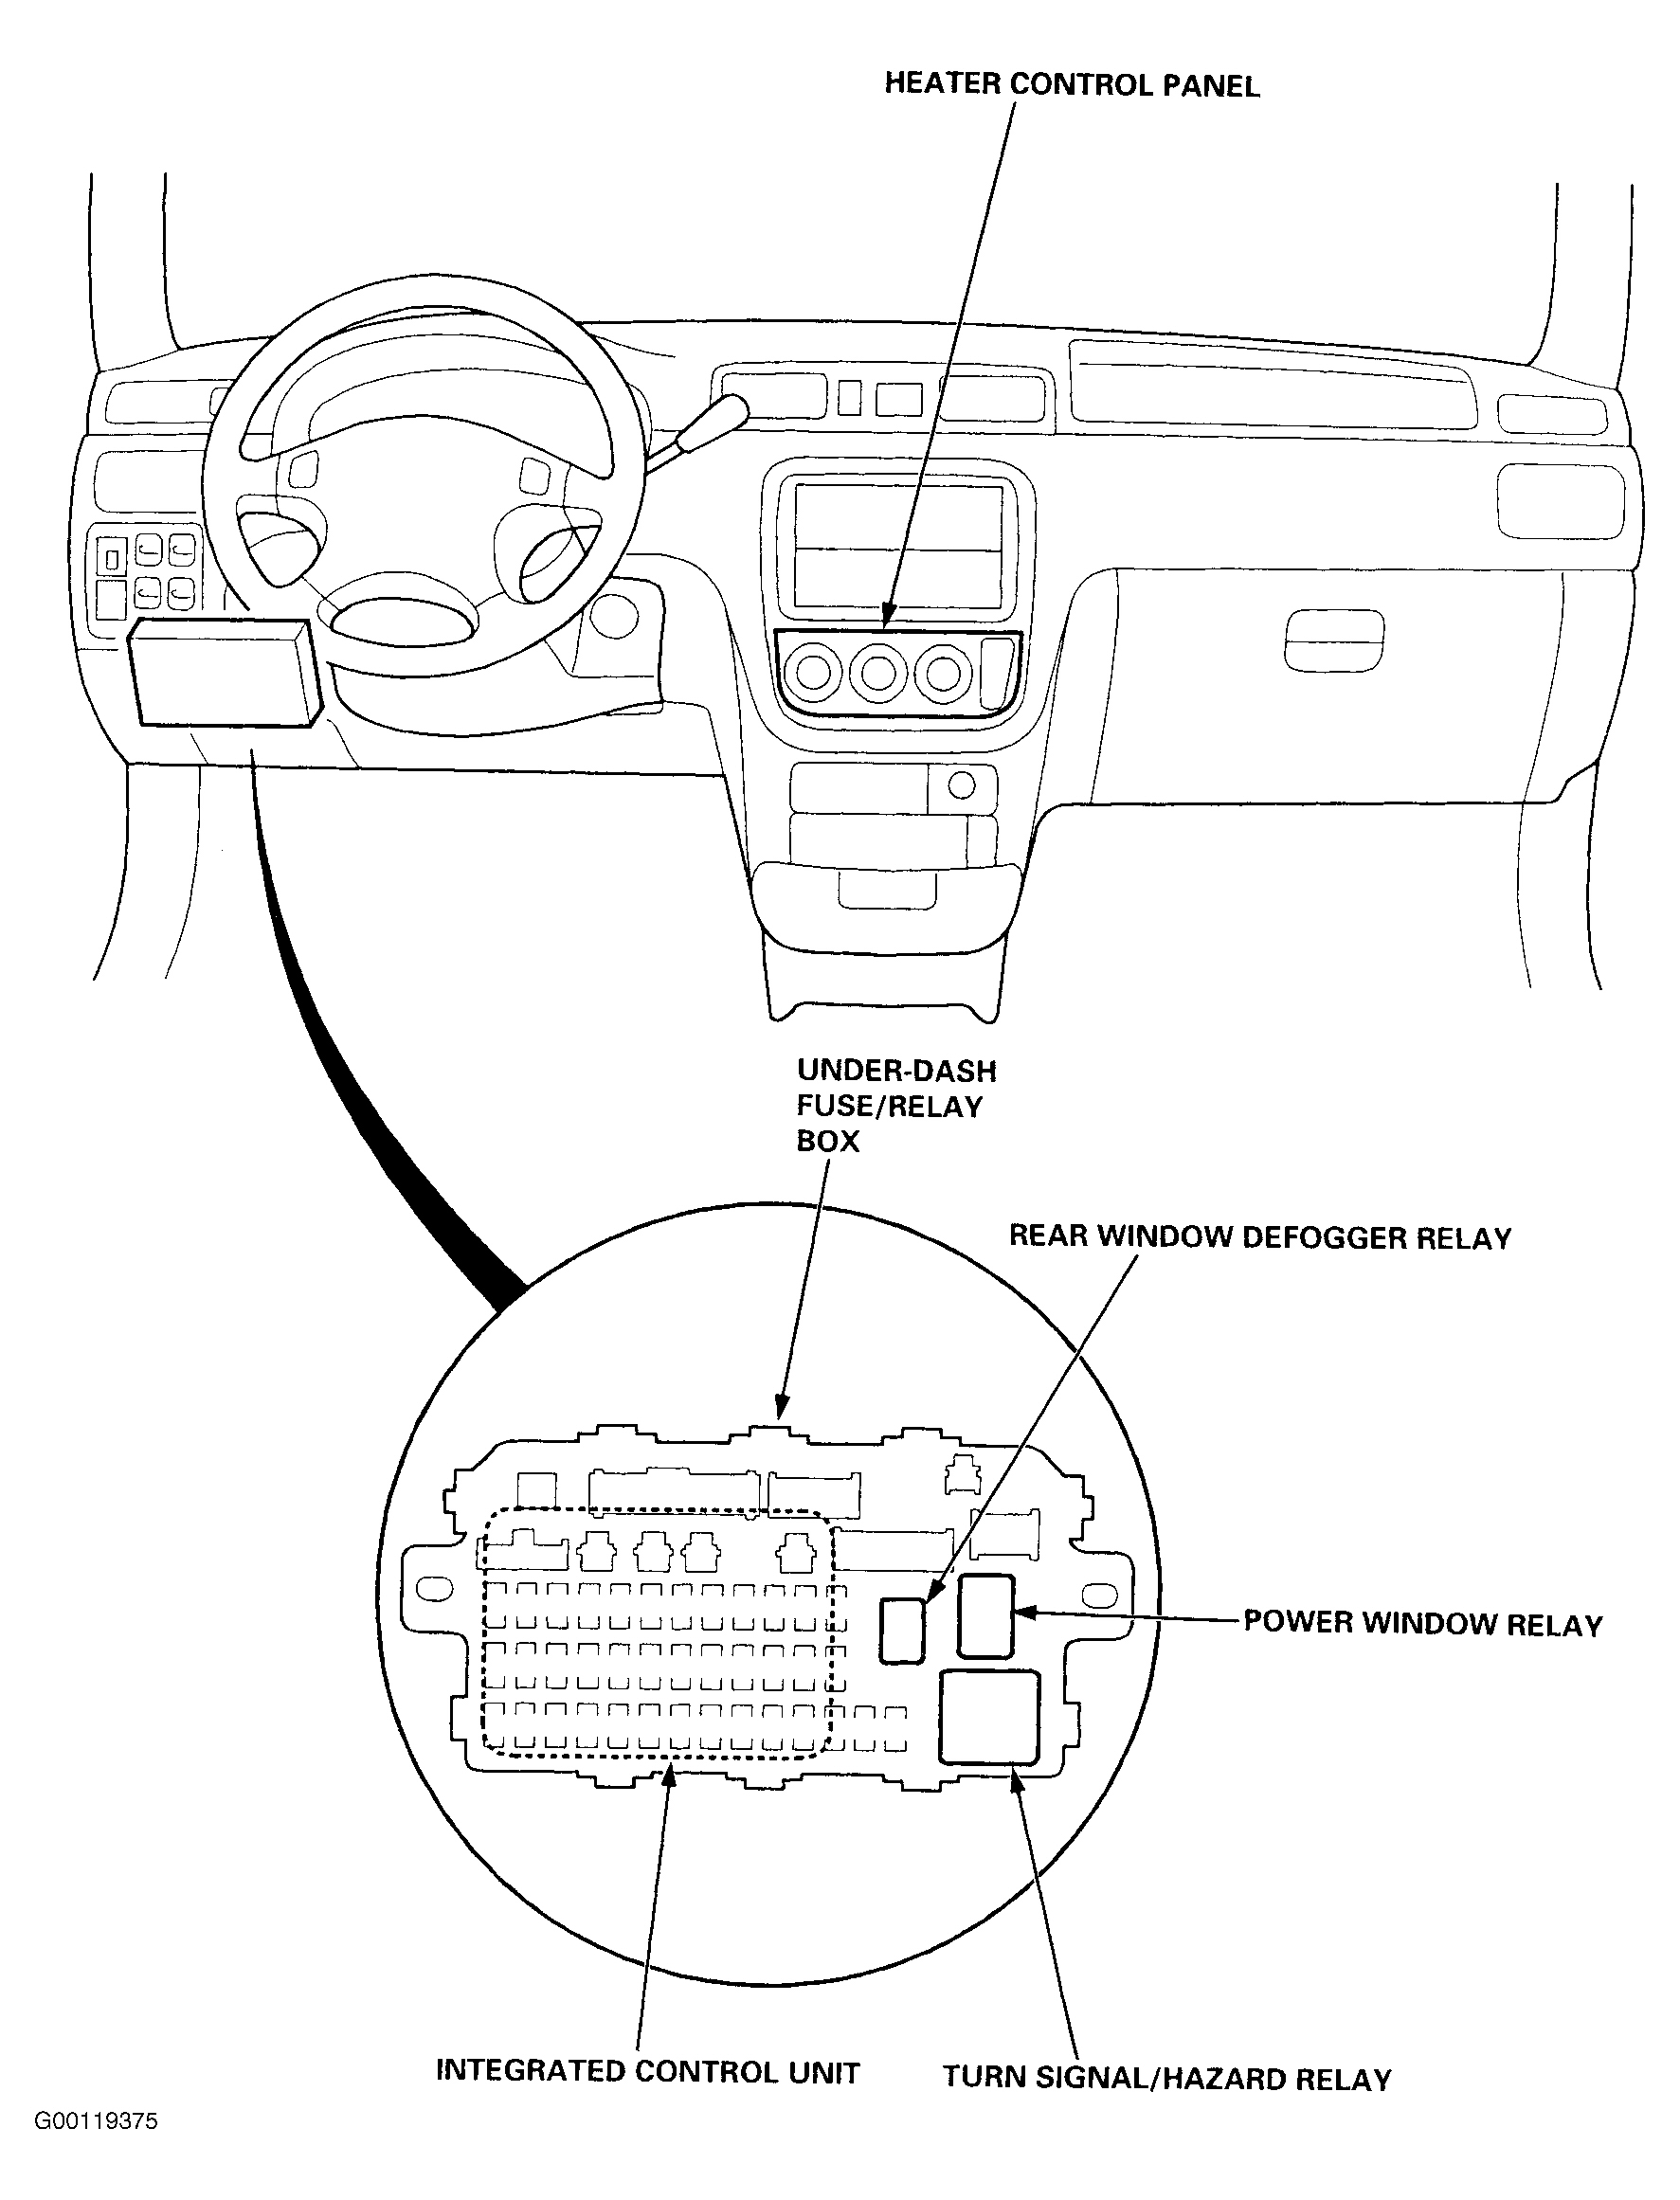 Honda CR-V SE 2000 - Component Locations -  Locating Under-Dash Fuse/Relay Box